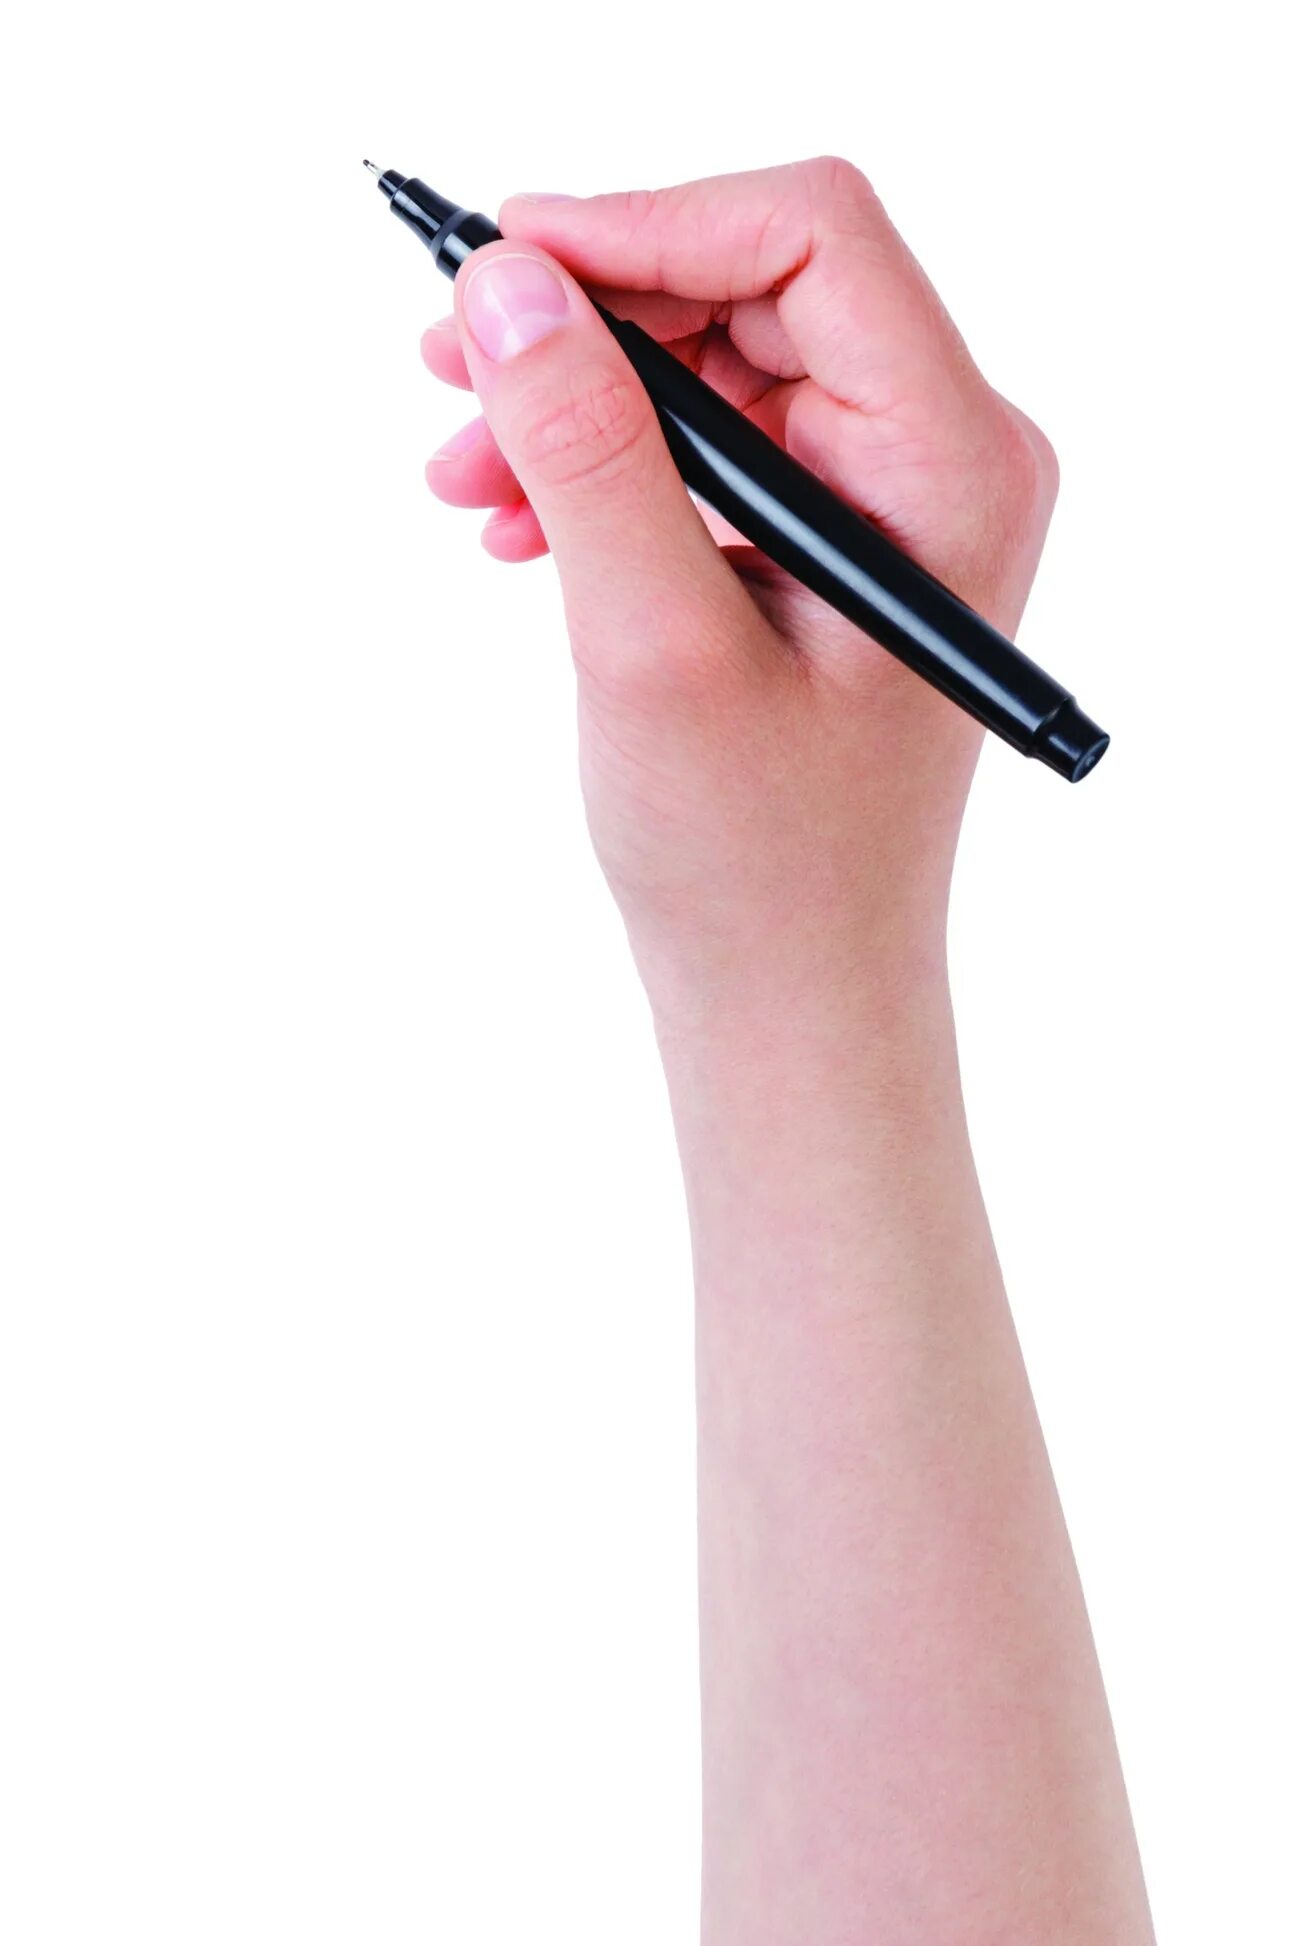 People pen. Рука с маркером. Рука с ручкой. Женская рука с ручкой. Рука с ручкой без фона.